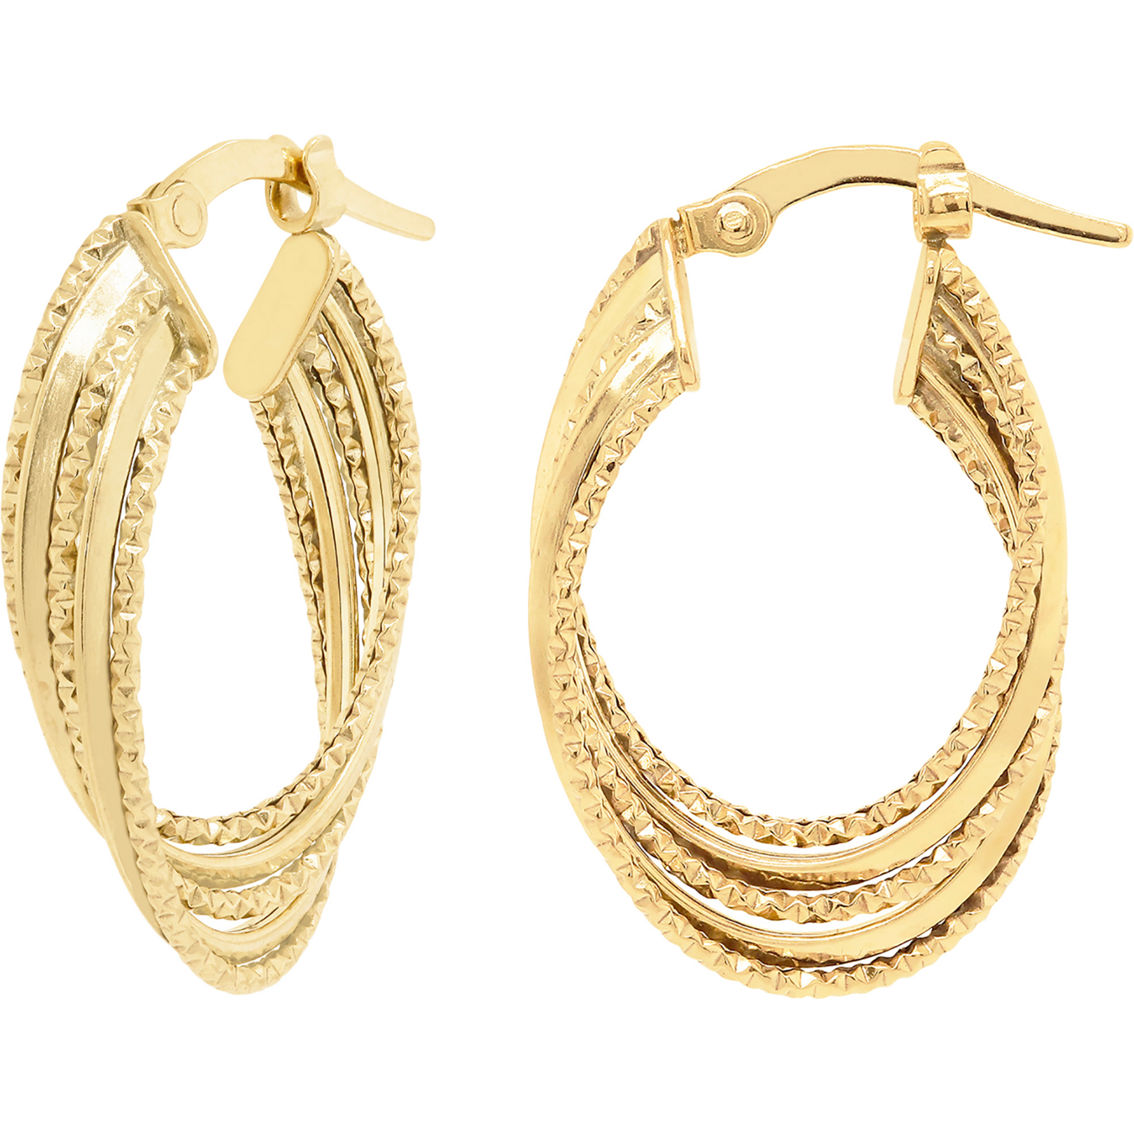 Kooljewelry 10k Yellow Gold Texture Finish Oval Hoop Earrings